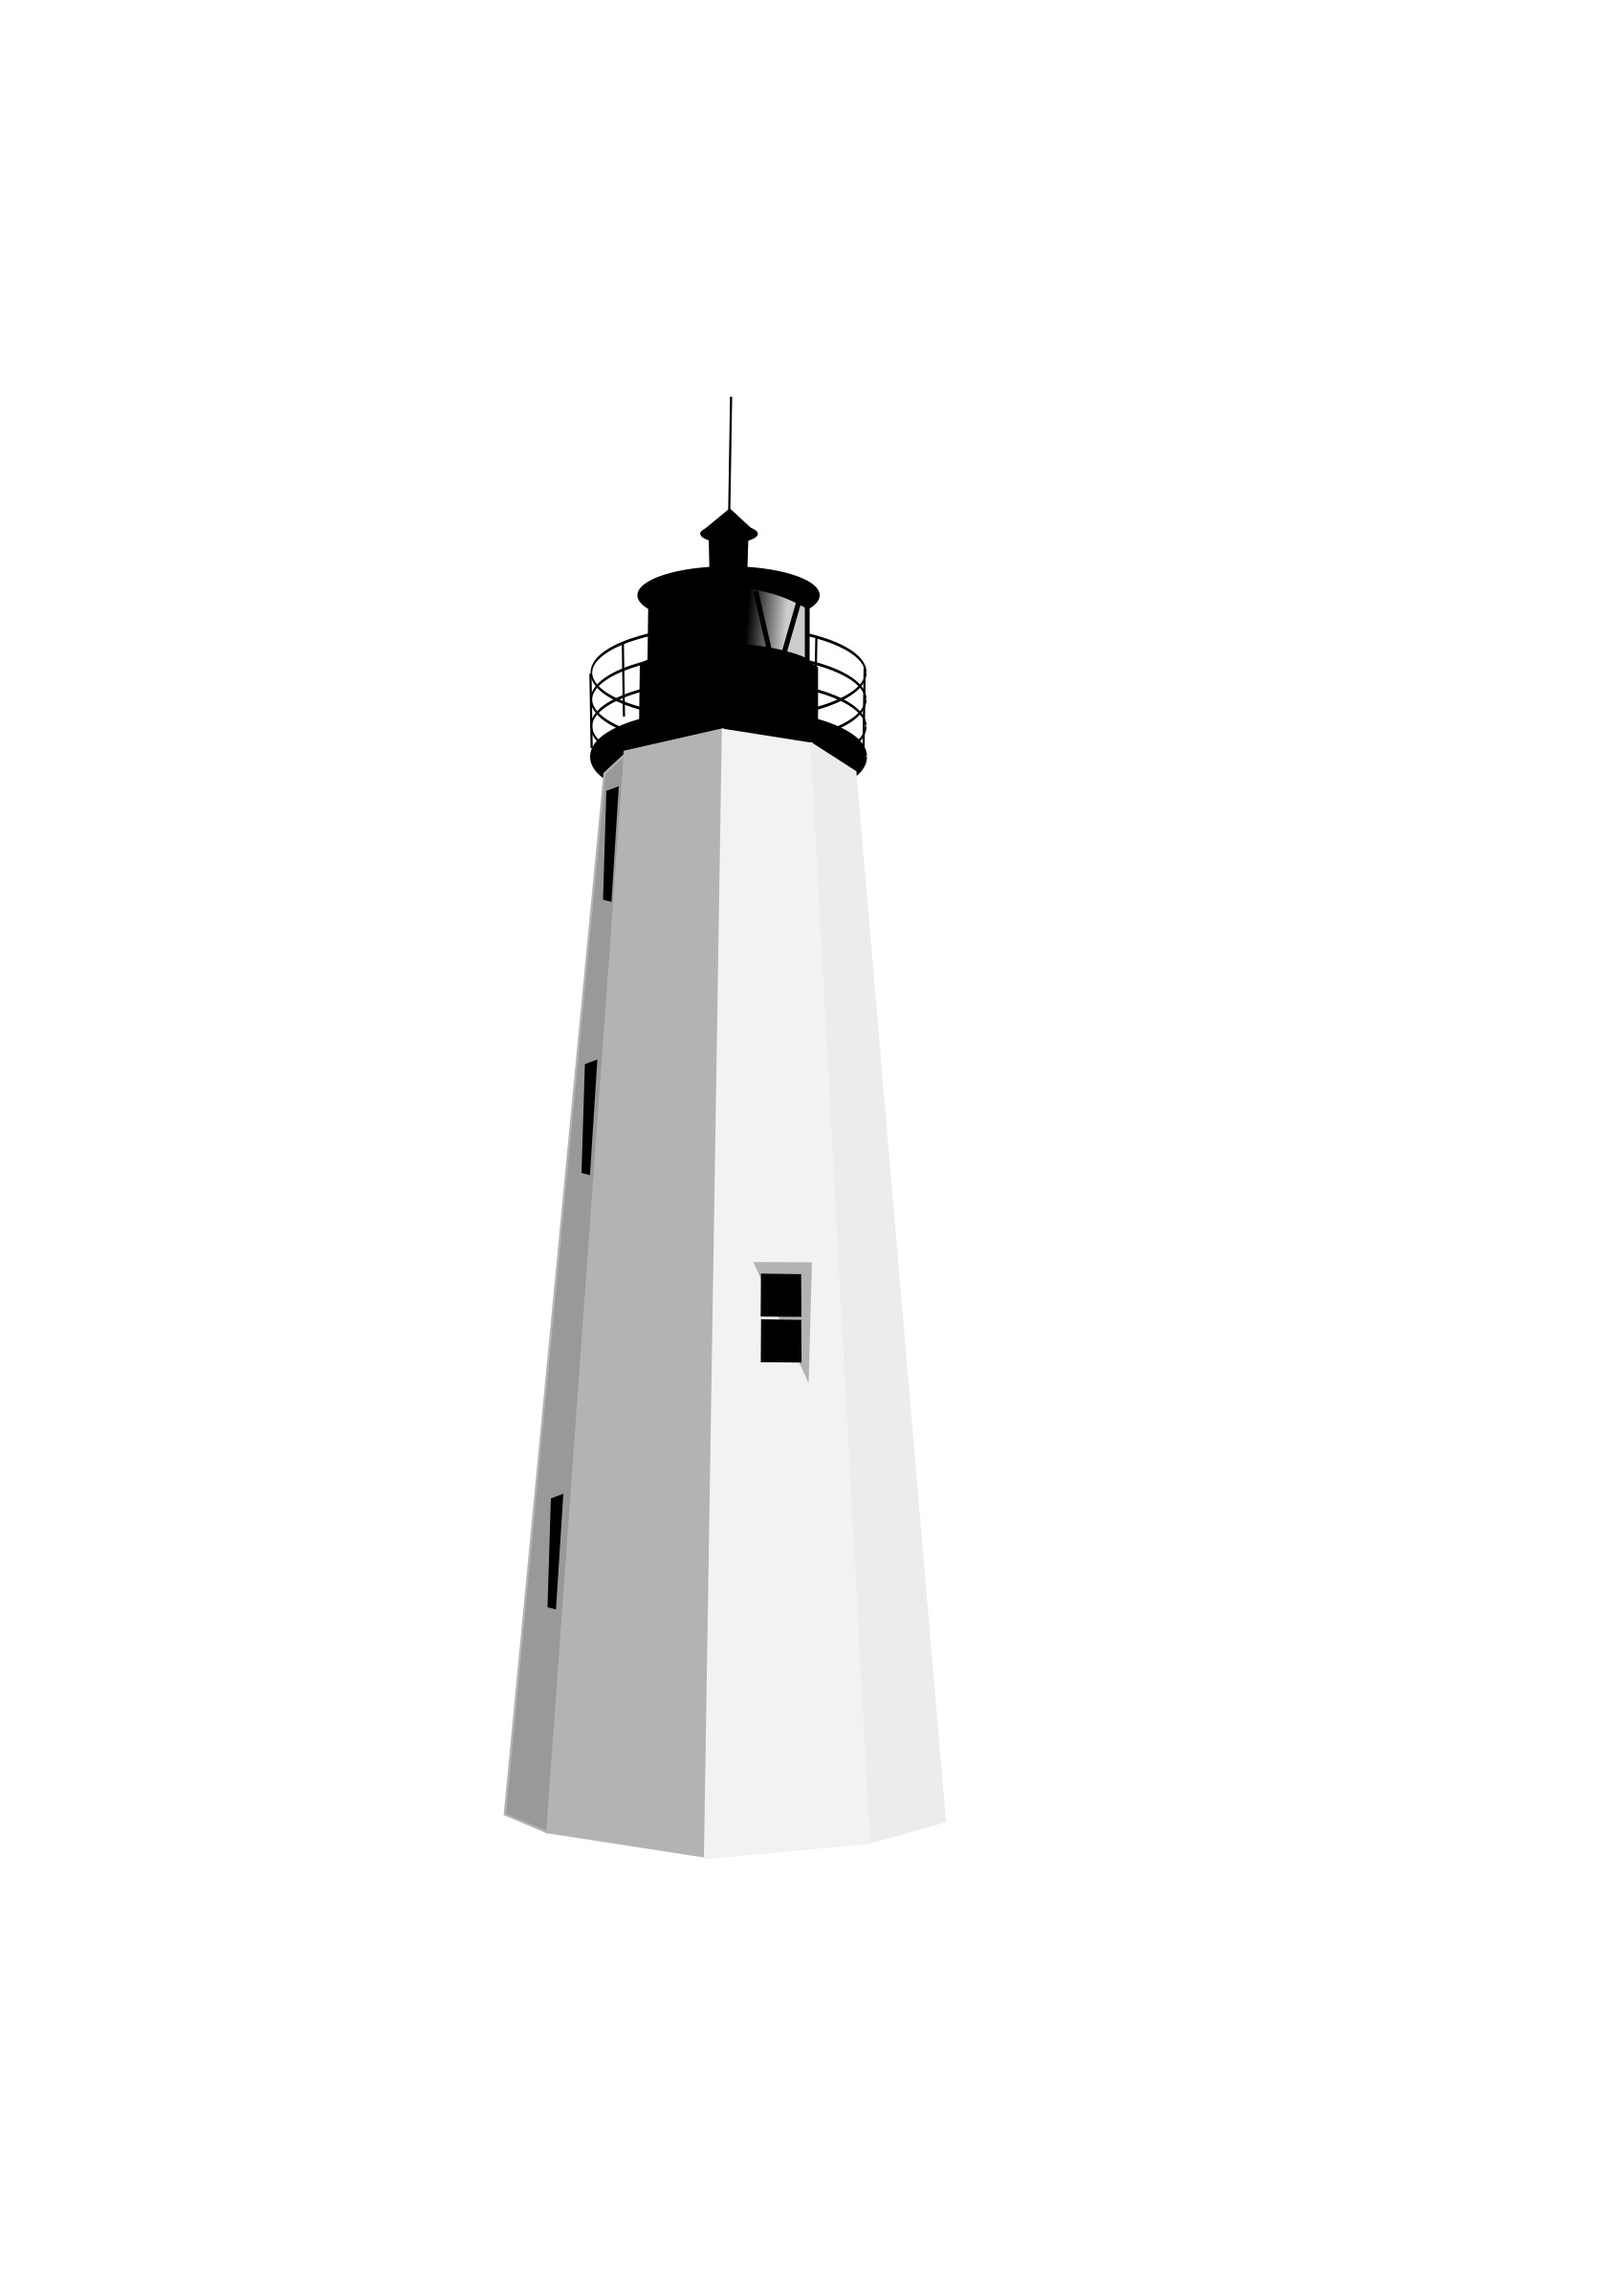 Black White Lighthouse Clipart icons